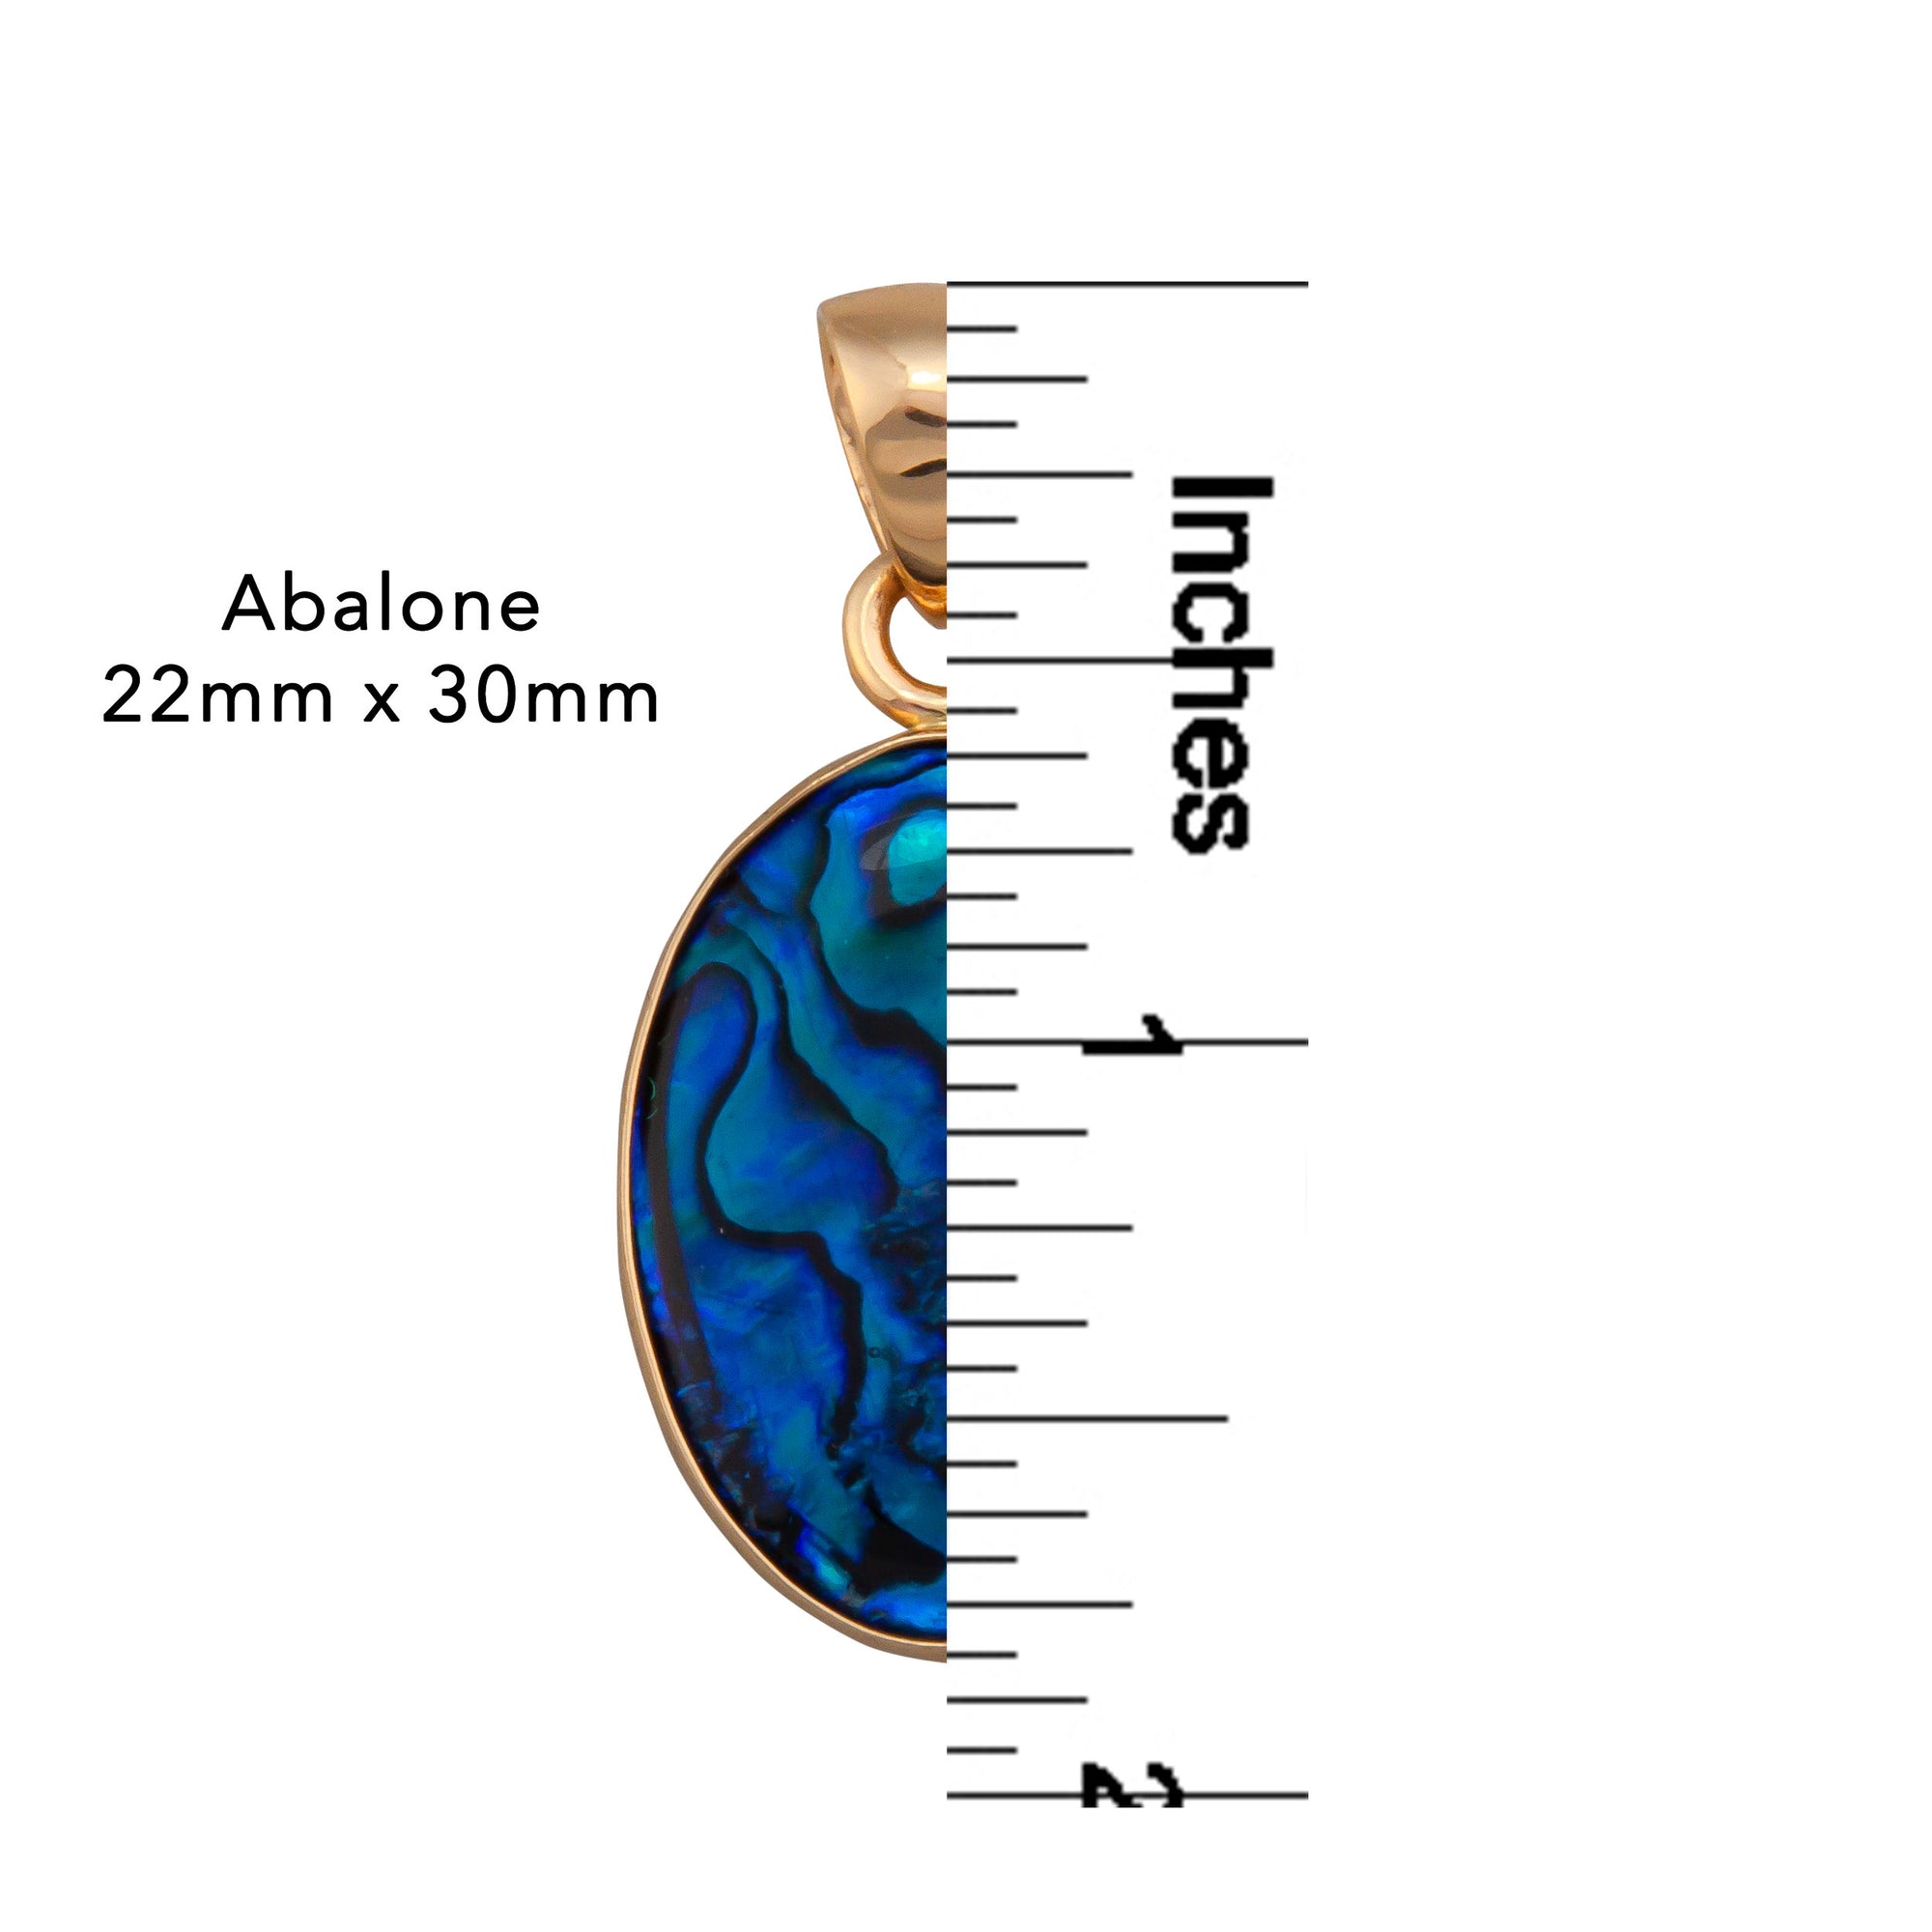 Charles Albert Jewelry - Alchemia Abalone Pendant - Blue - Measurements